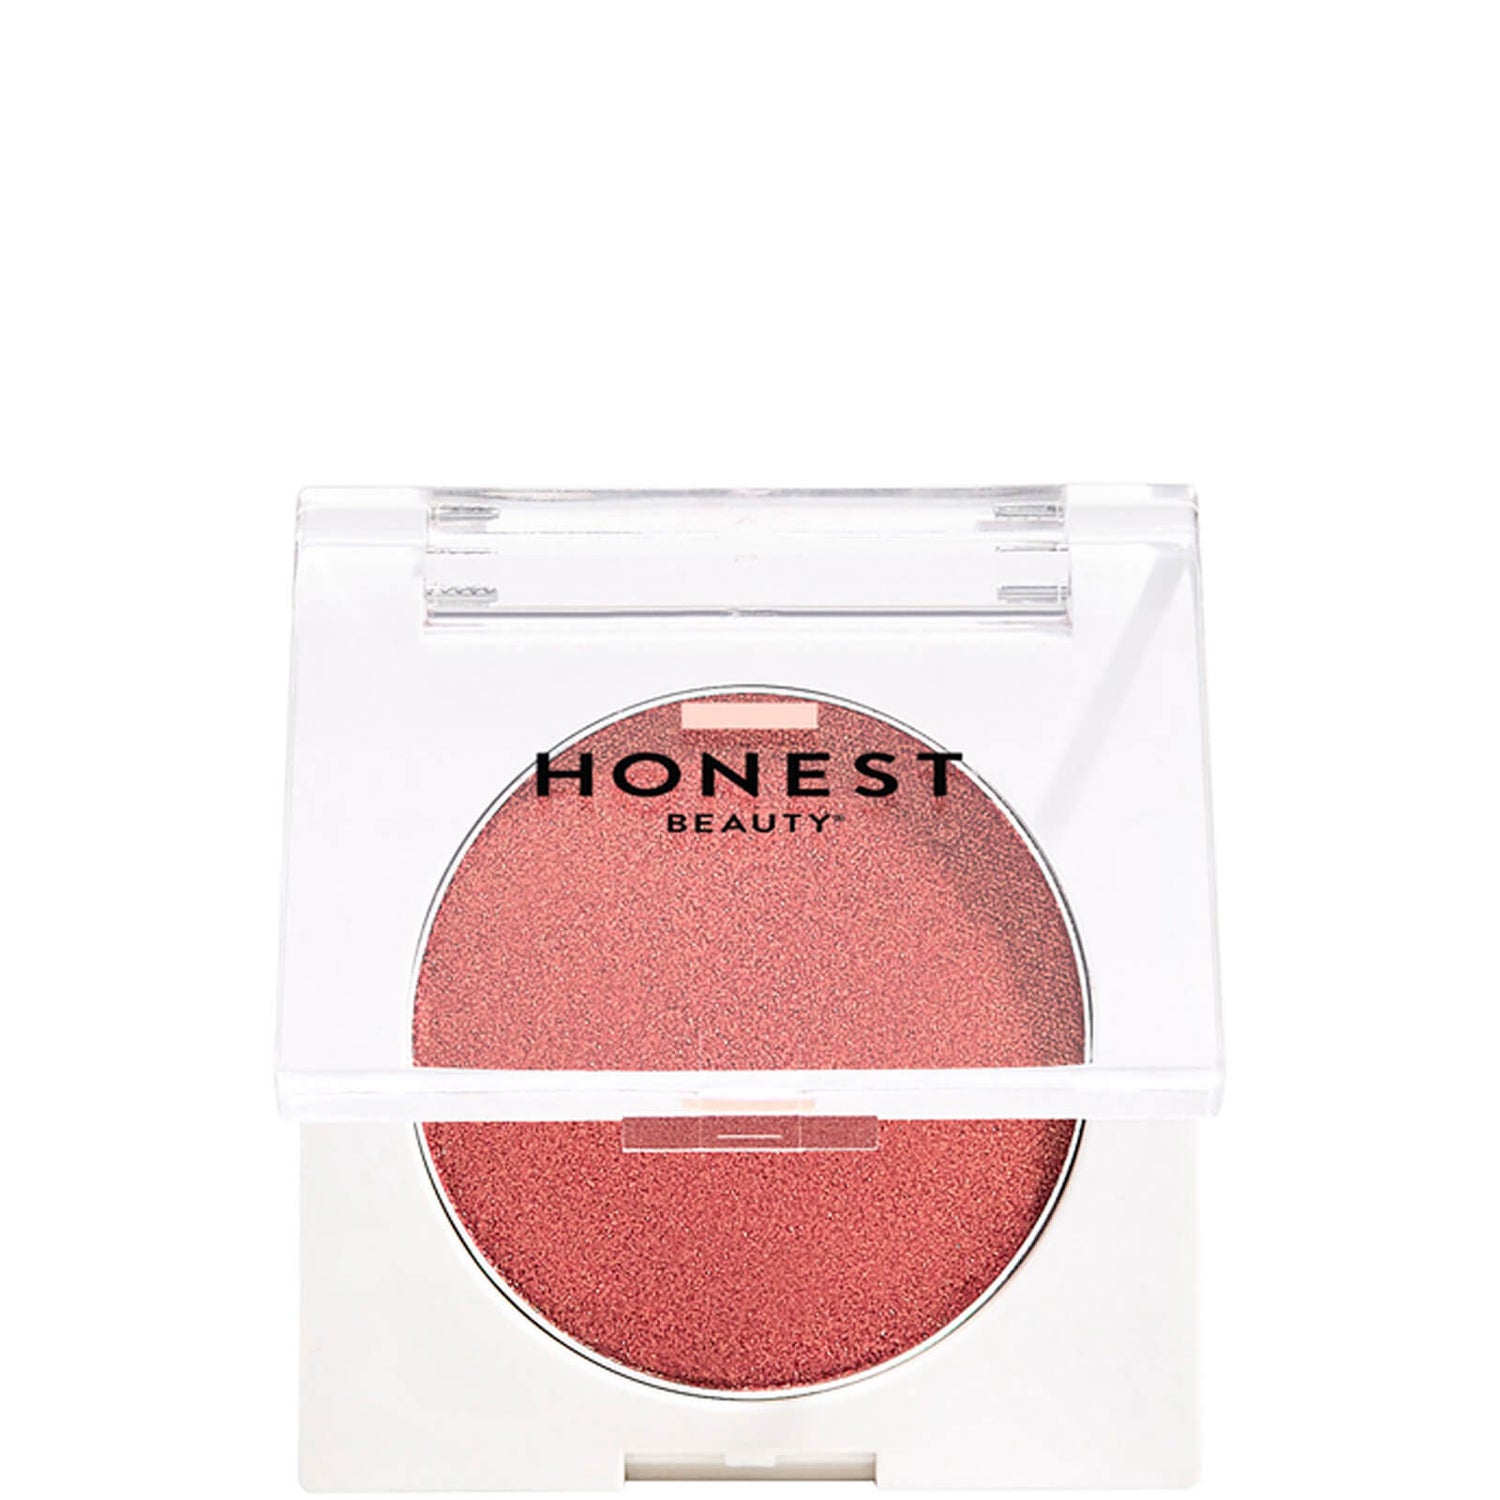 Honest Beauty LIT Powder Blush